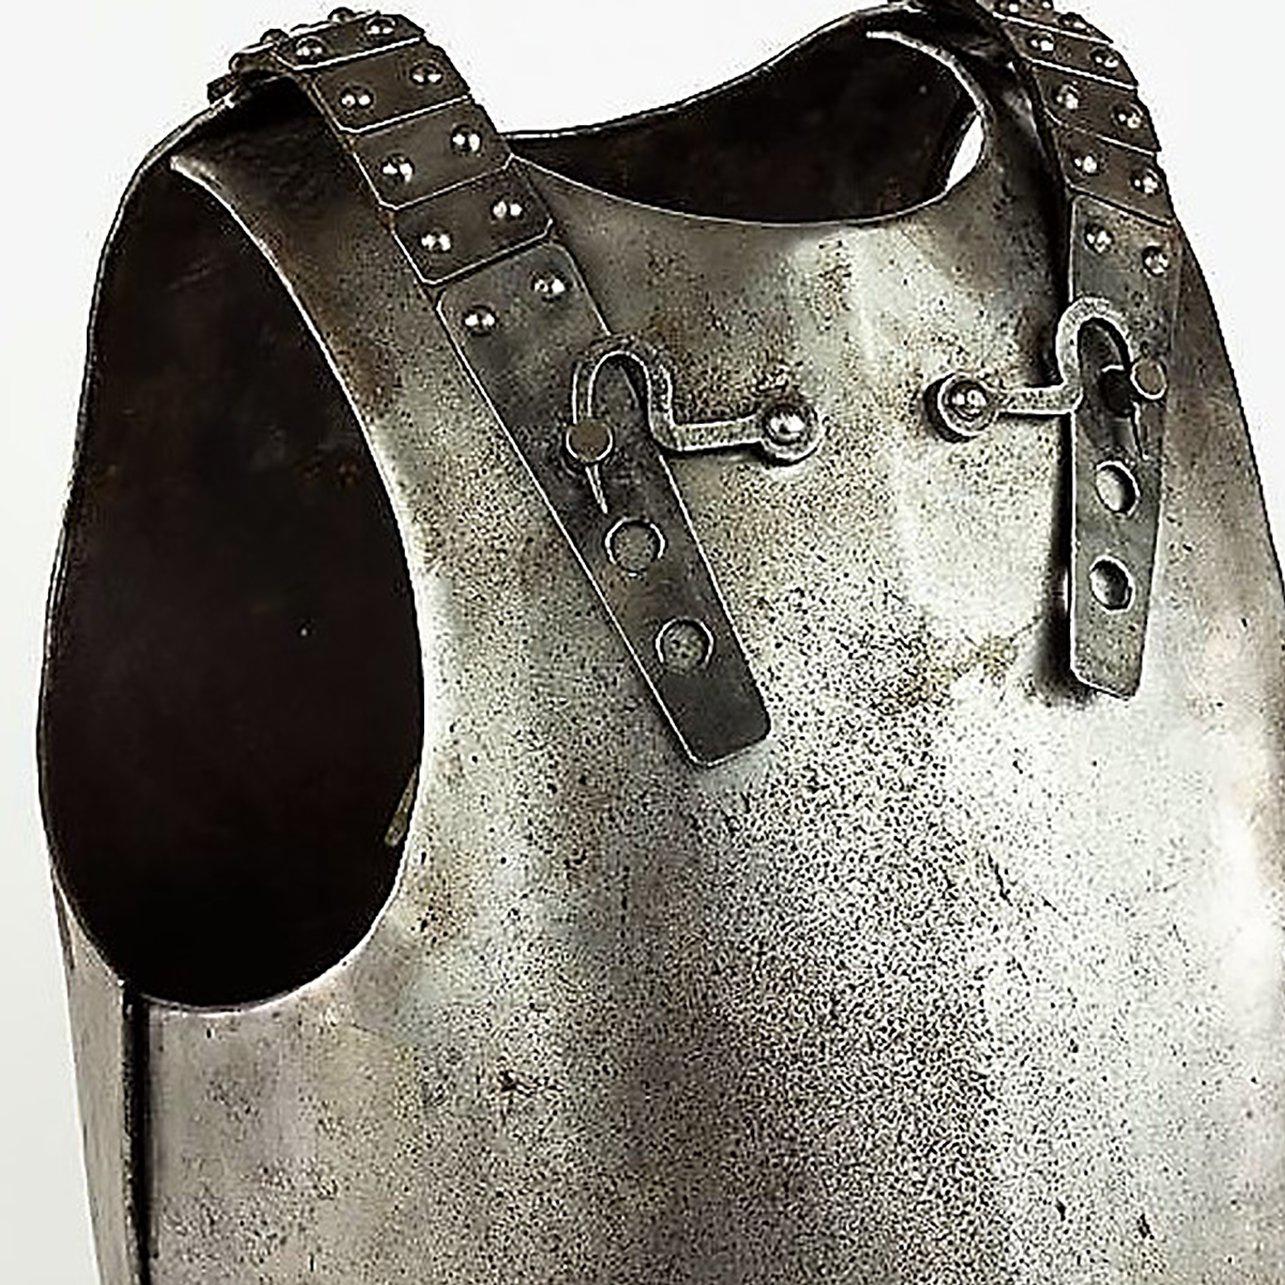 18th century armor